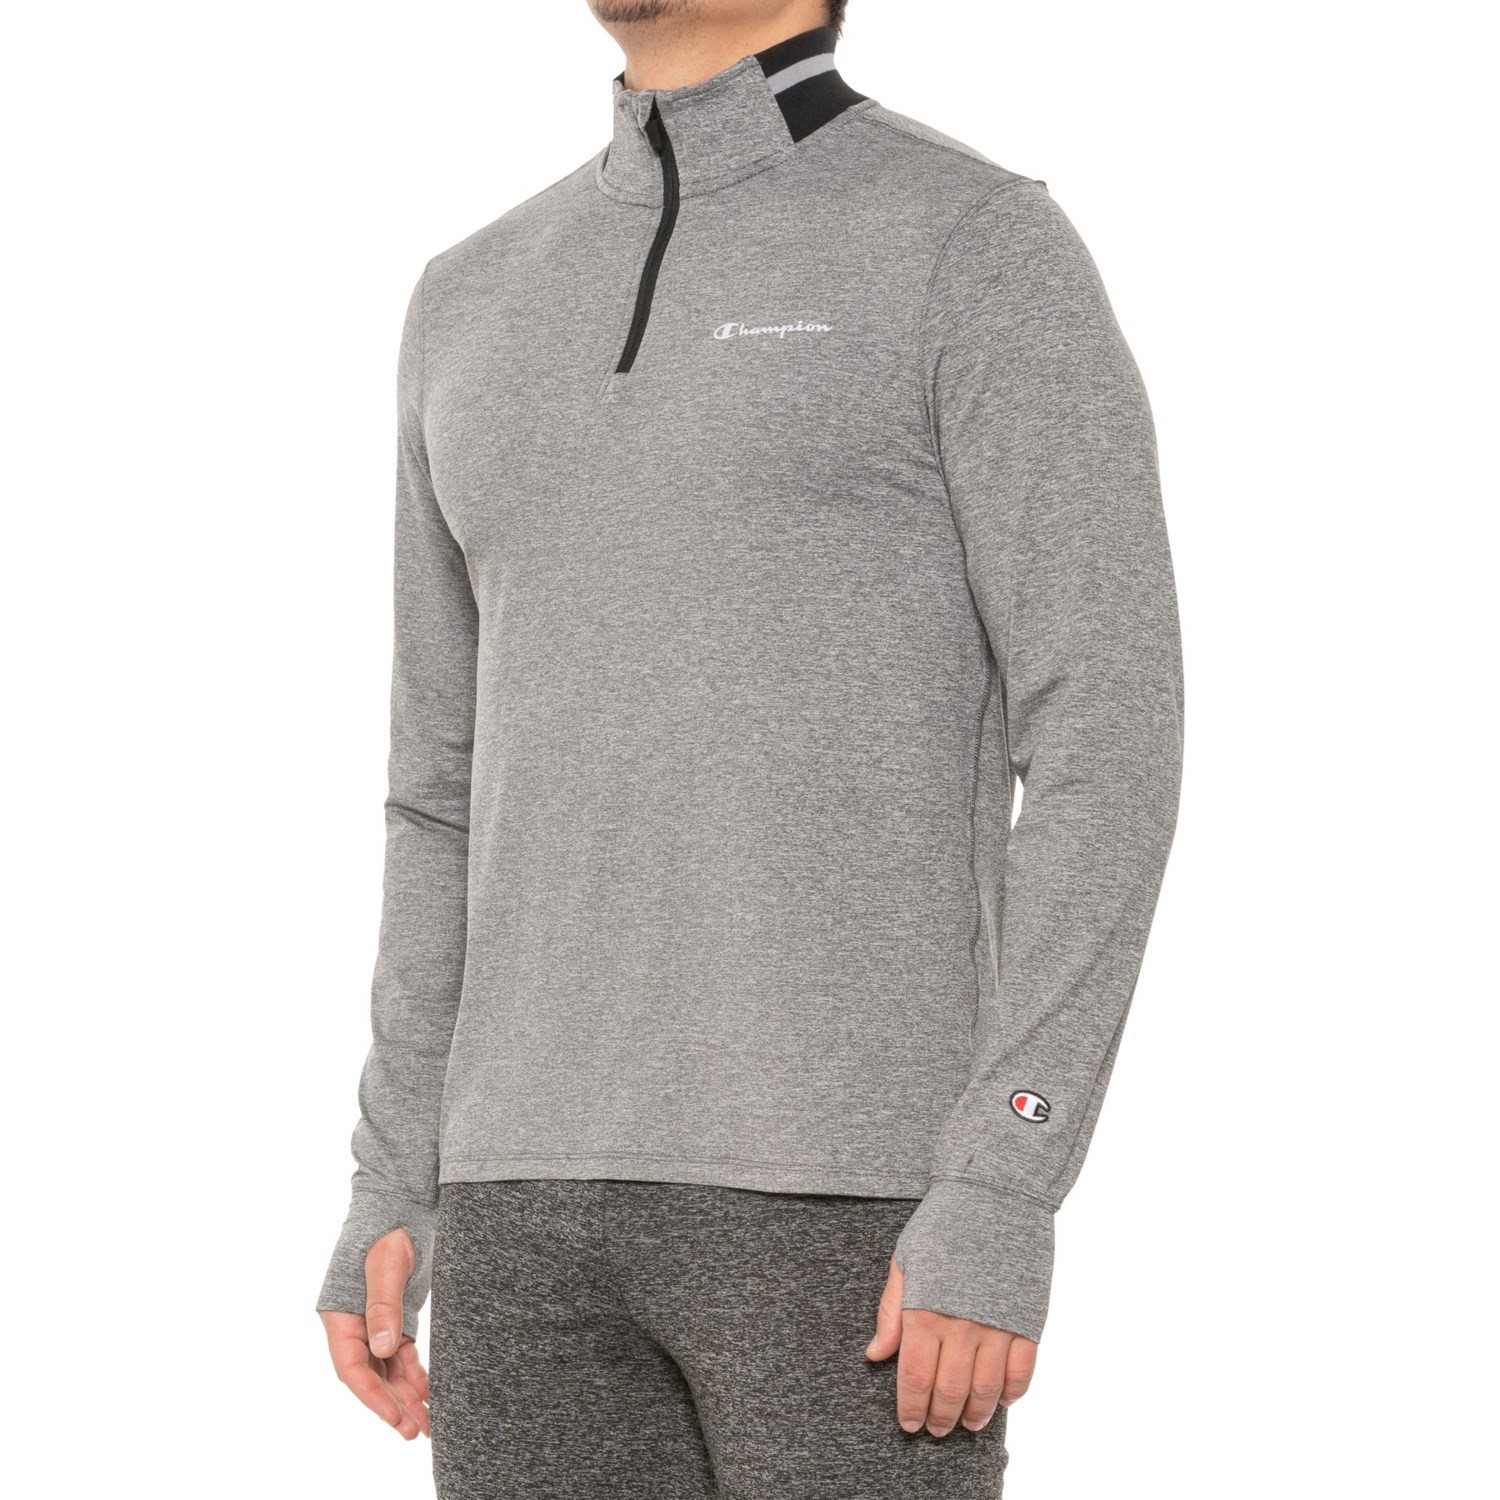 Champion City Sport Shirt - Zip Neck, Long Sleeve (For Men)